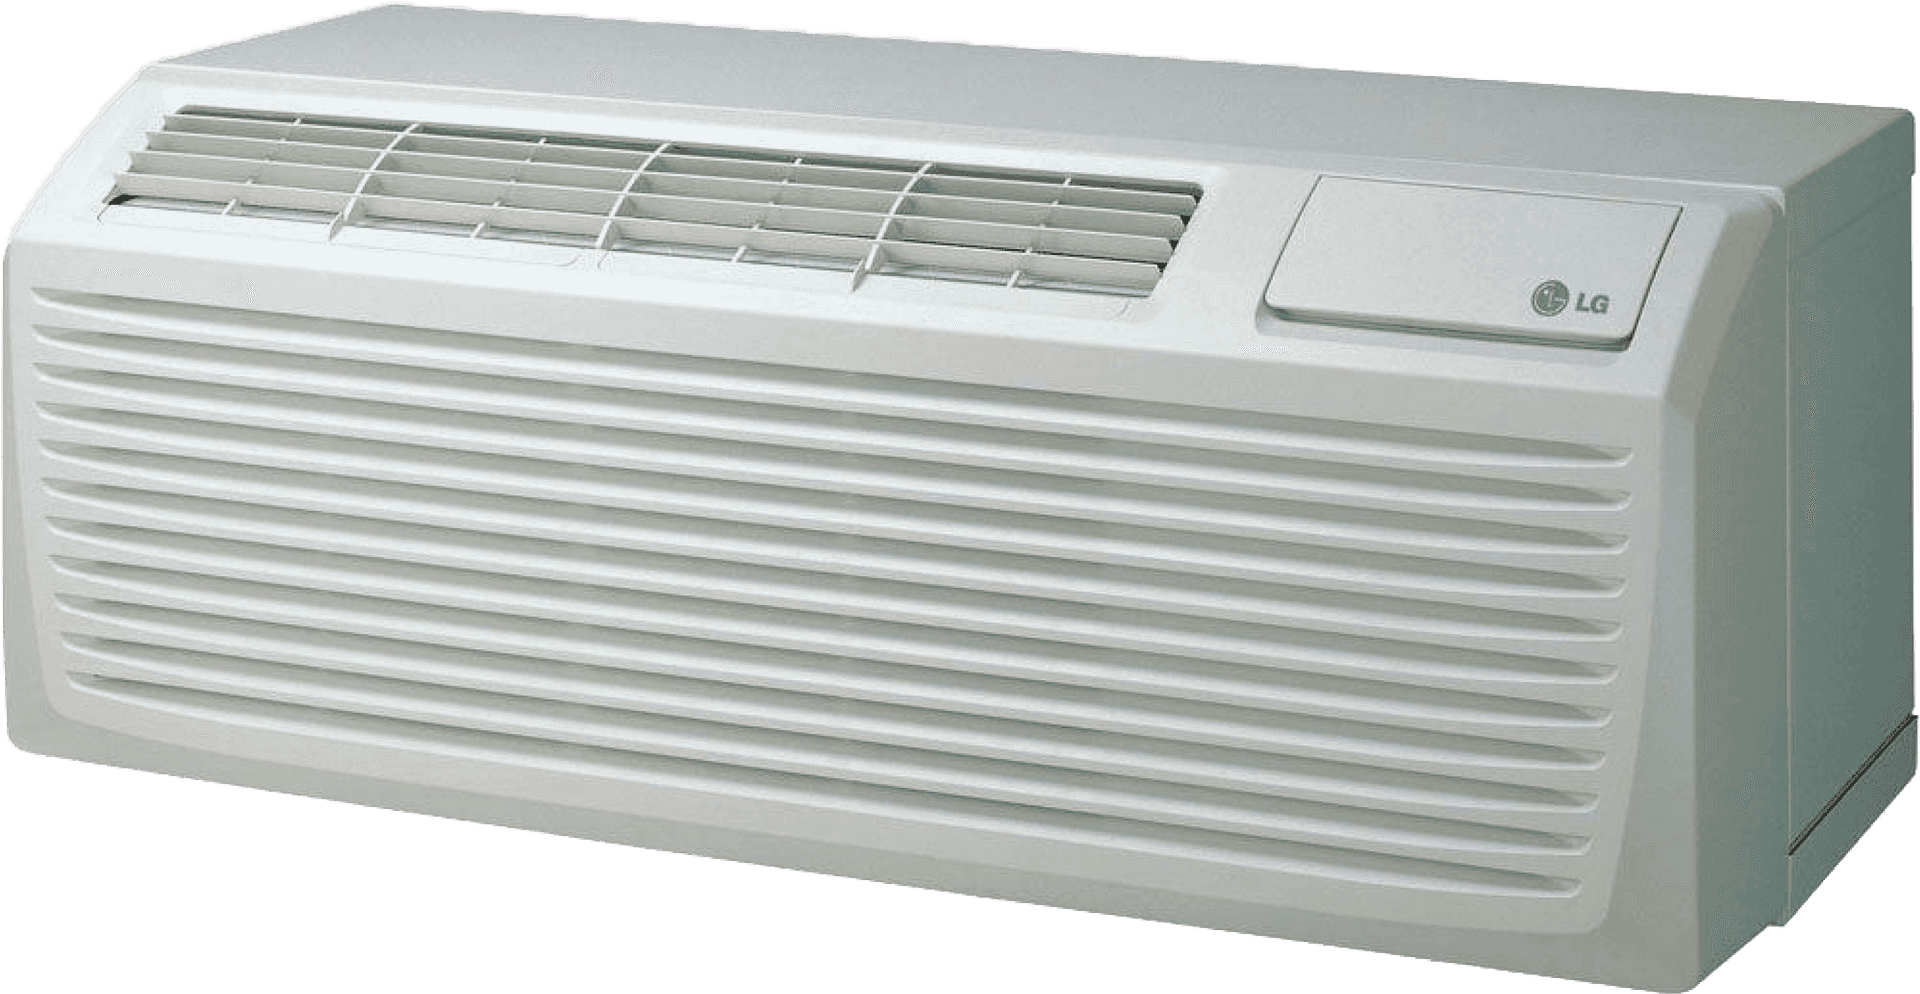 L G Window Air Conditioner Unit PNG